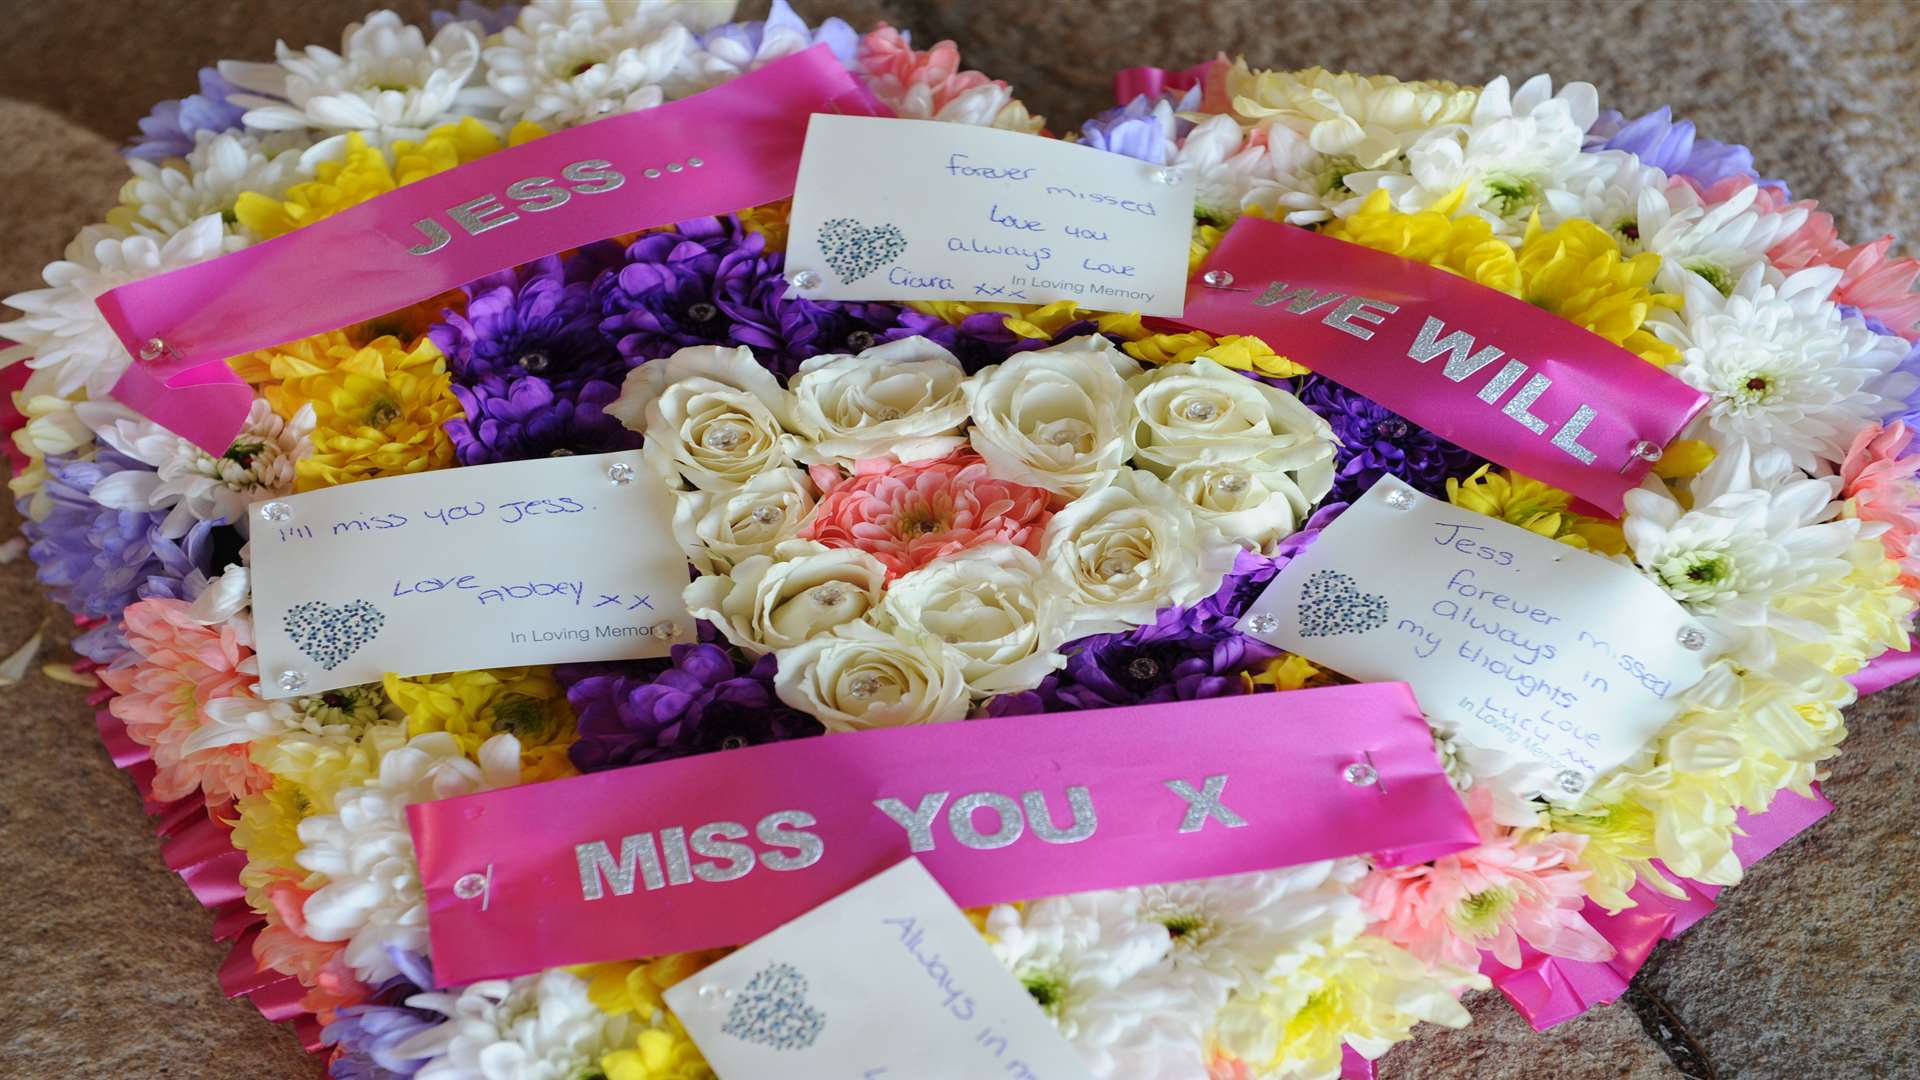 Flowers left for Jessica